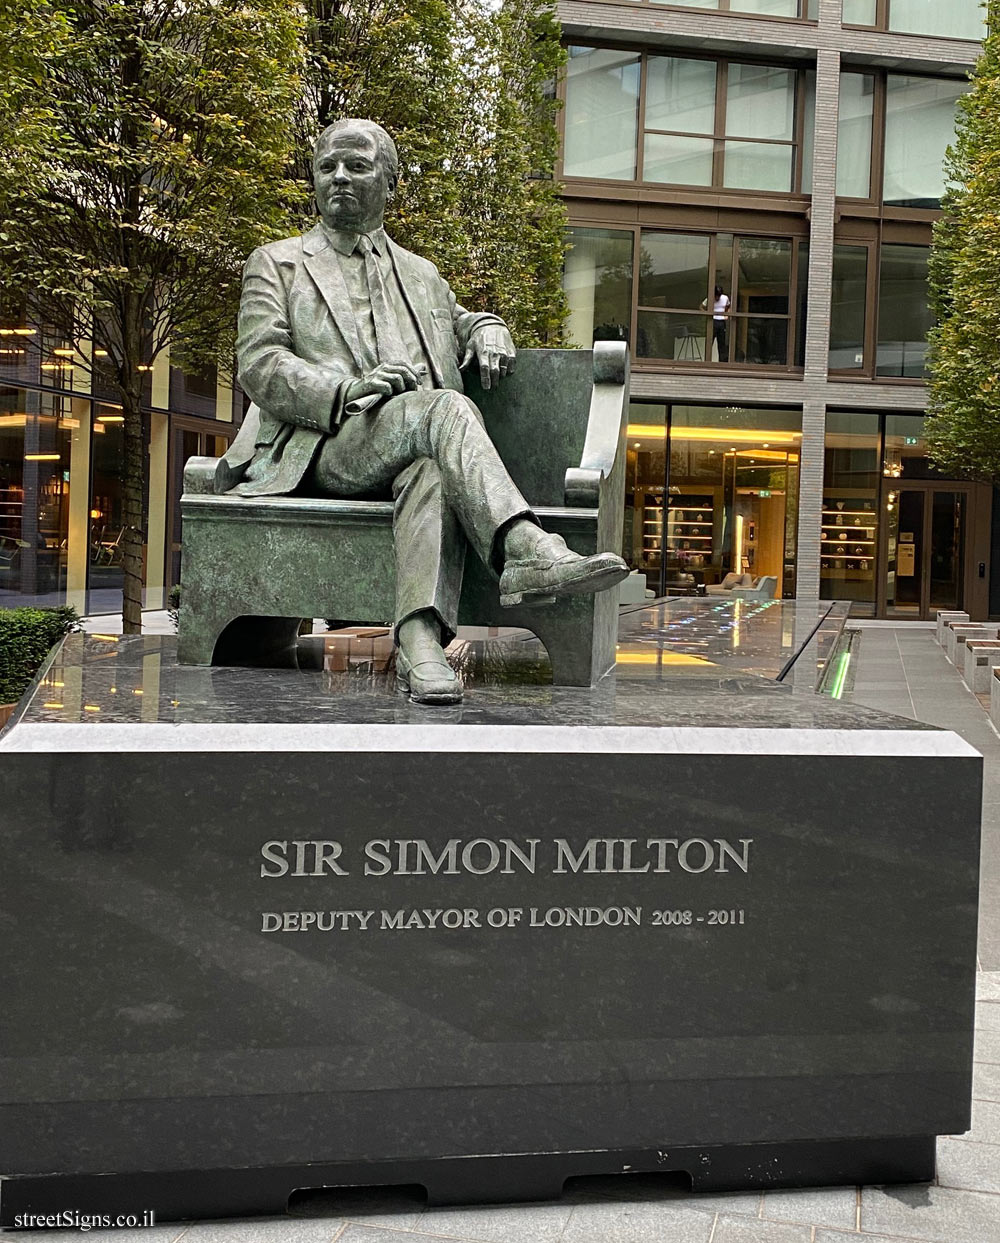 London - A memorial statue of Sir Simon Milton - Sir Simon Milton Statue, One Tower Bridge, London SE1 2RL, UK